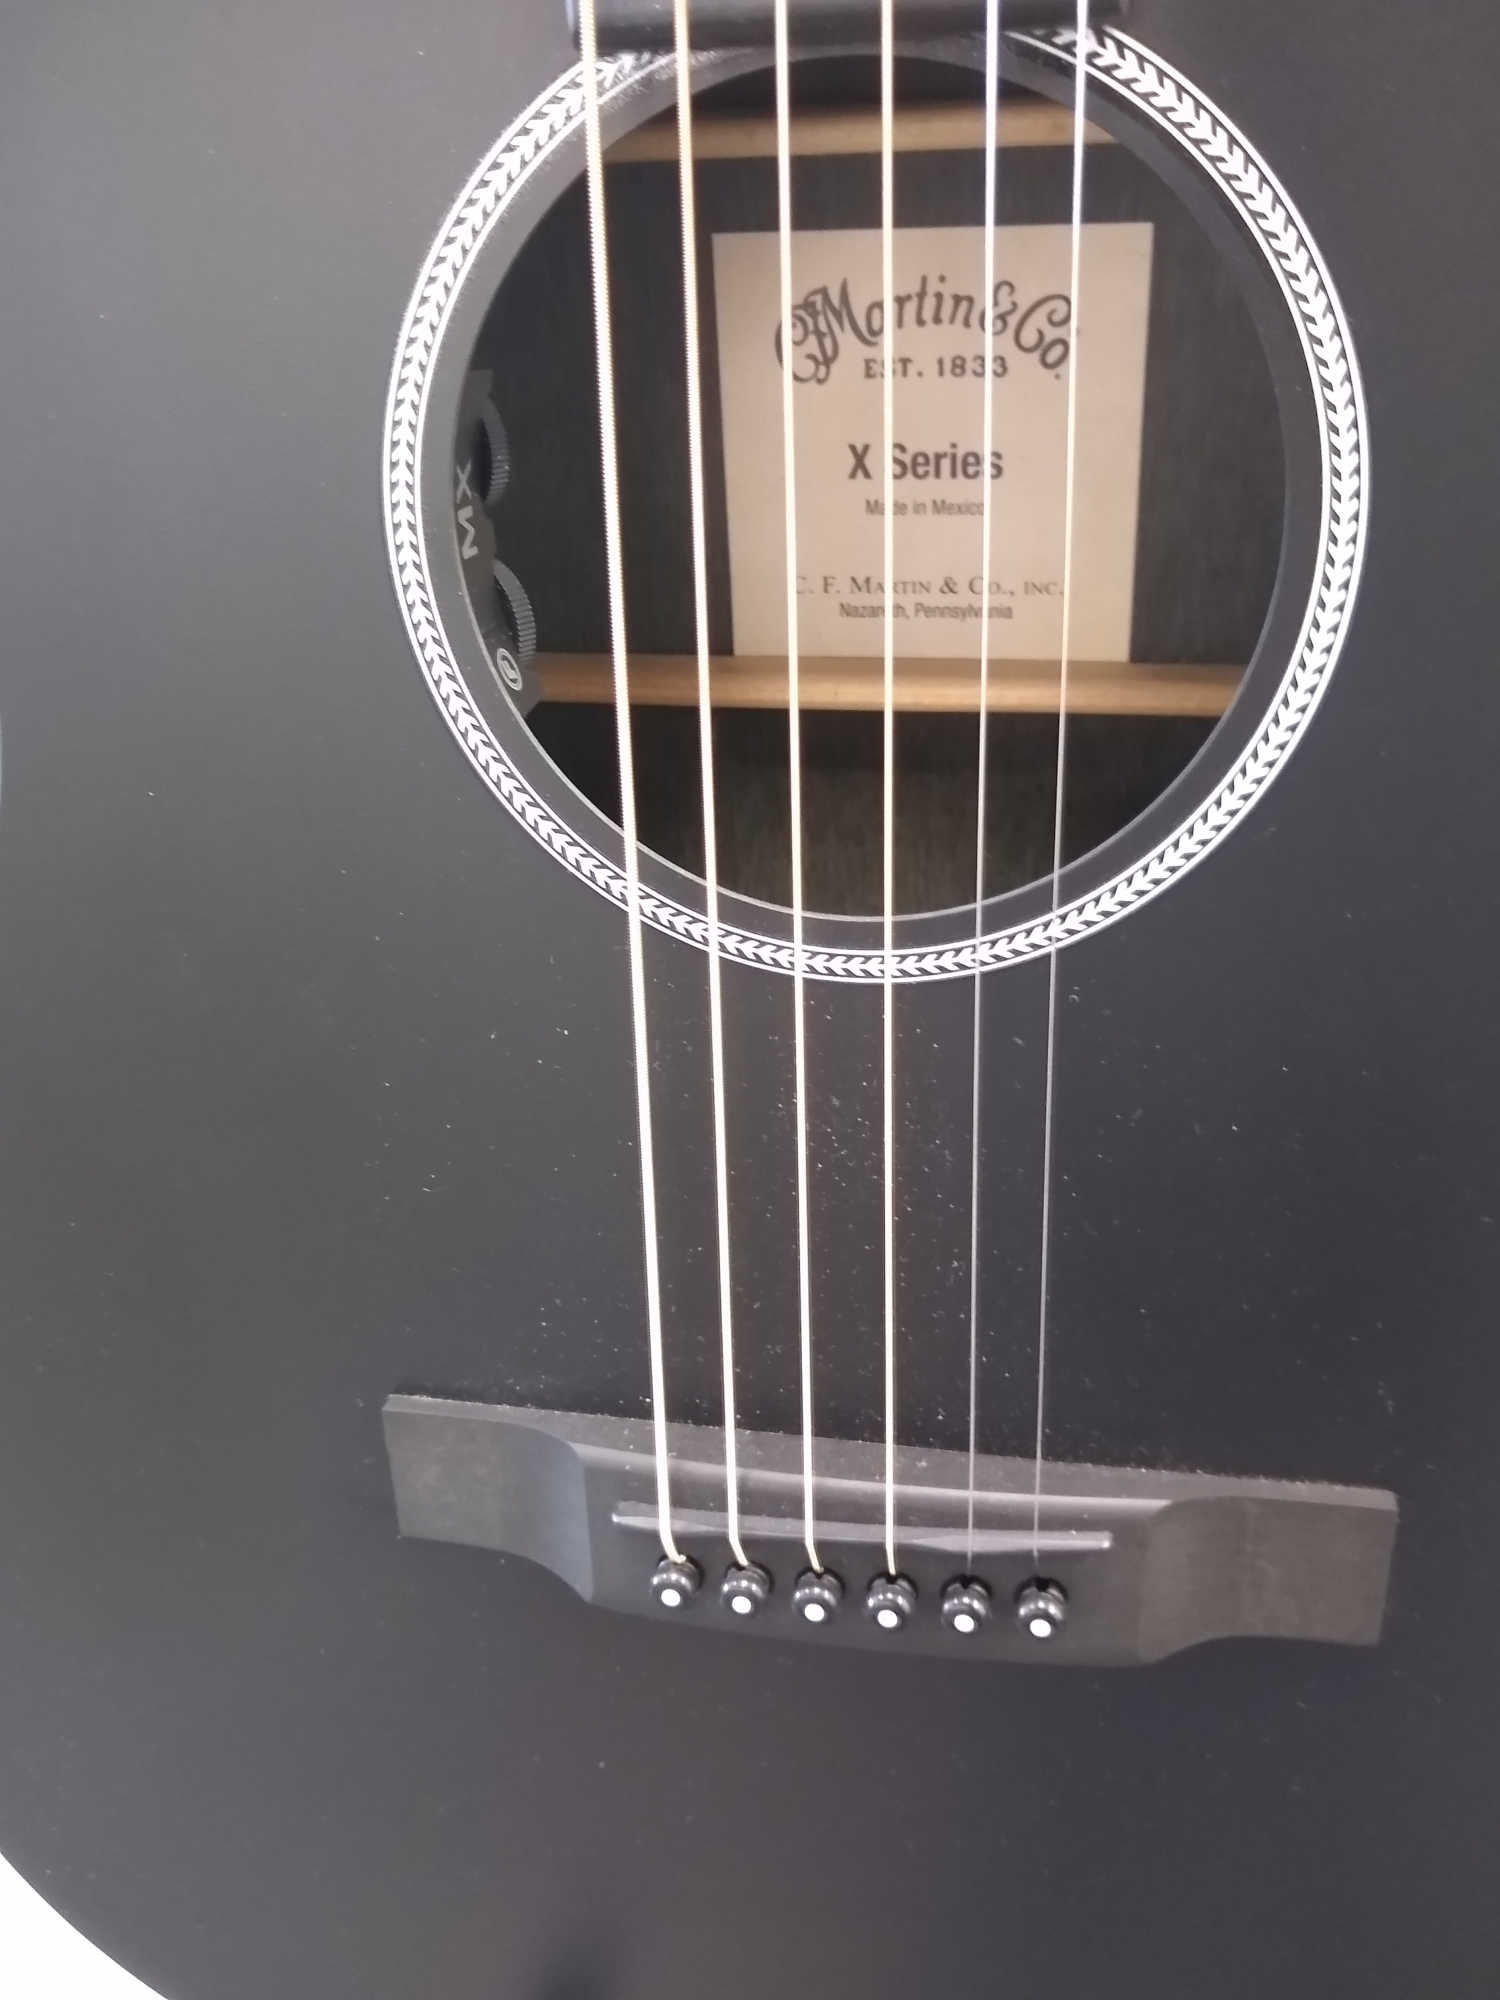 Martin OMCXAE Guitar - Black